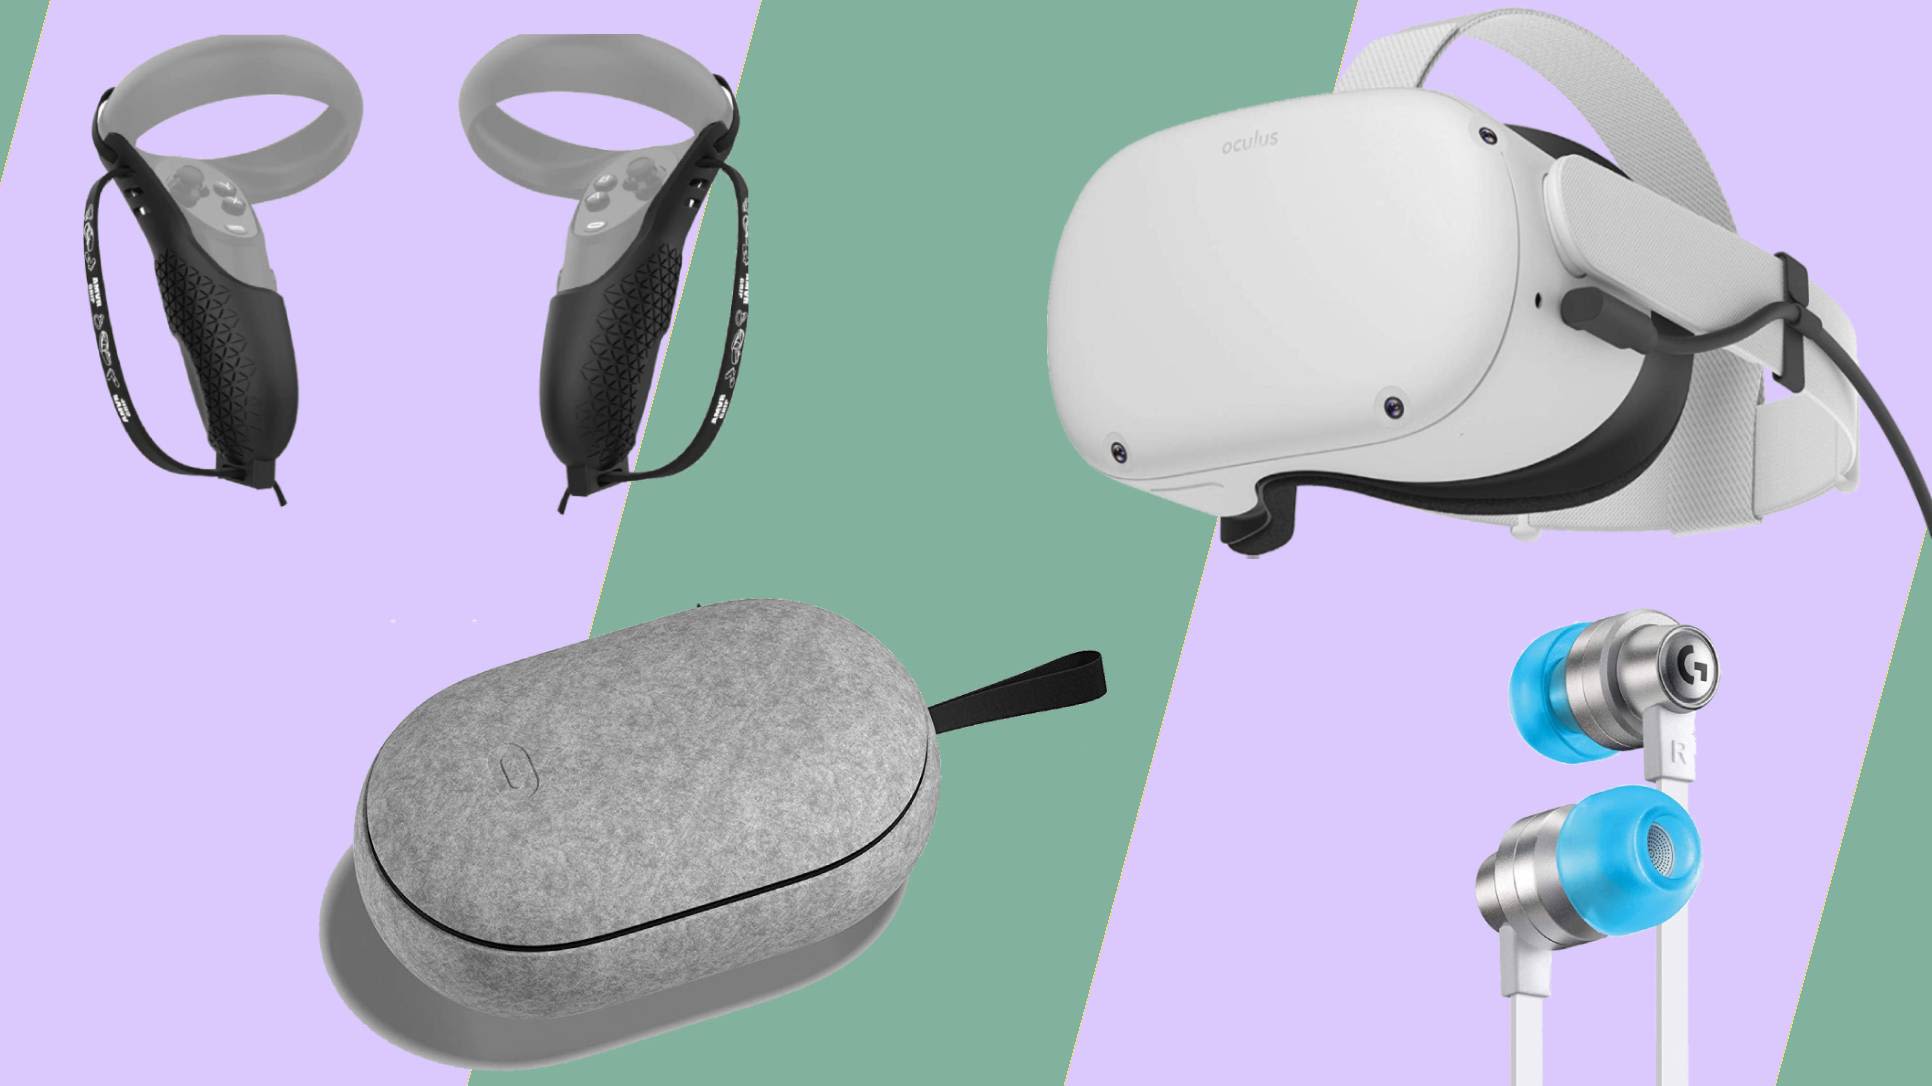 Best Oculus Quest accessories | CNN Underscored